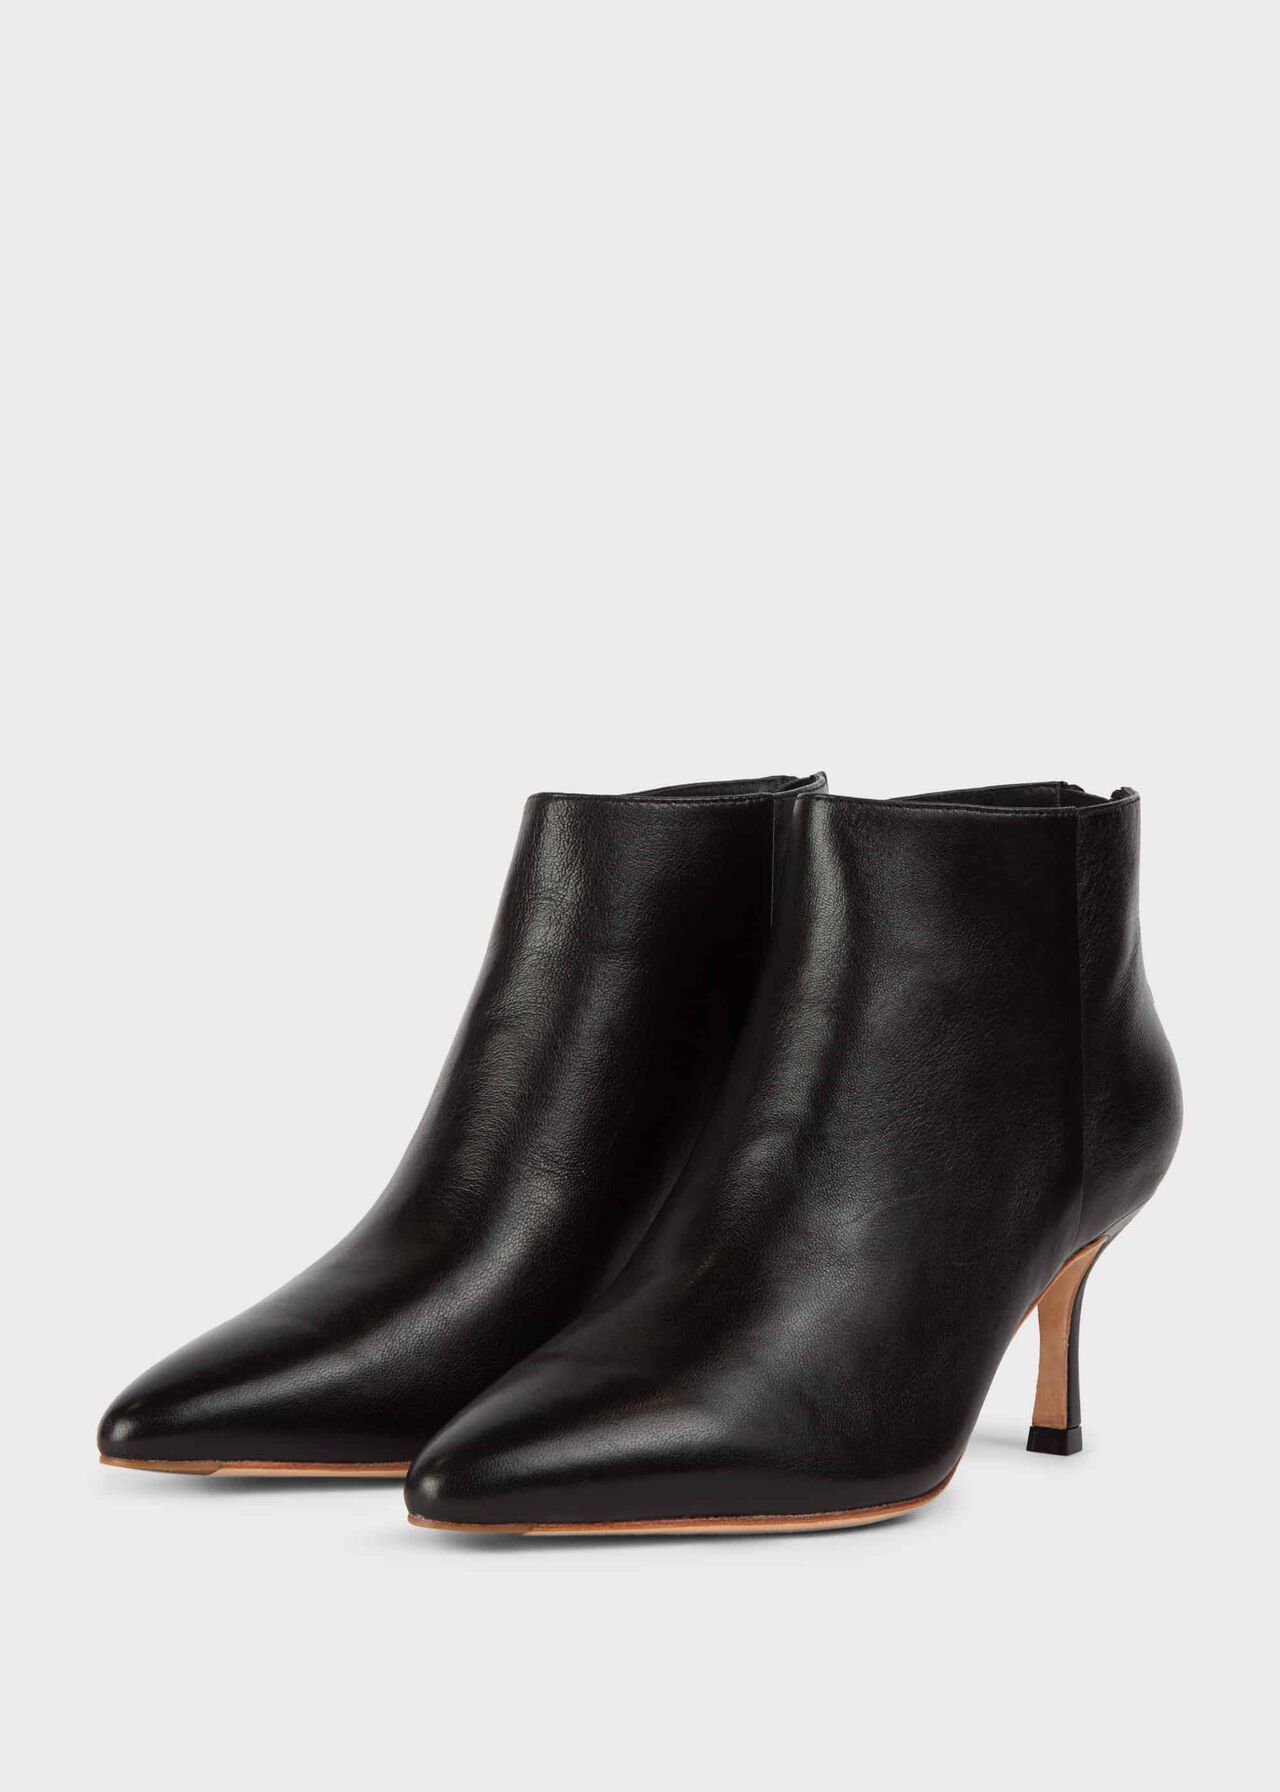 Stella Ankle Boots, Black, hi-res